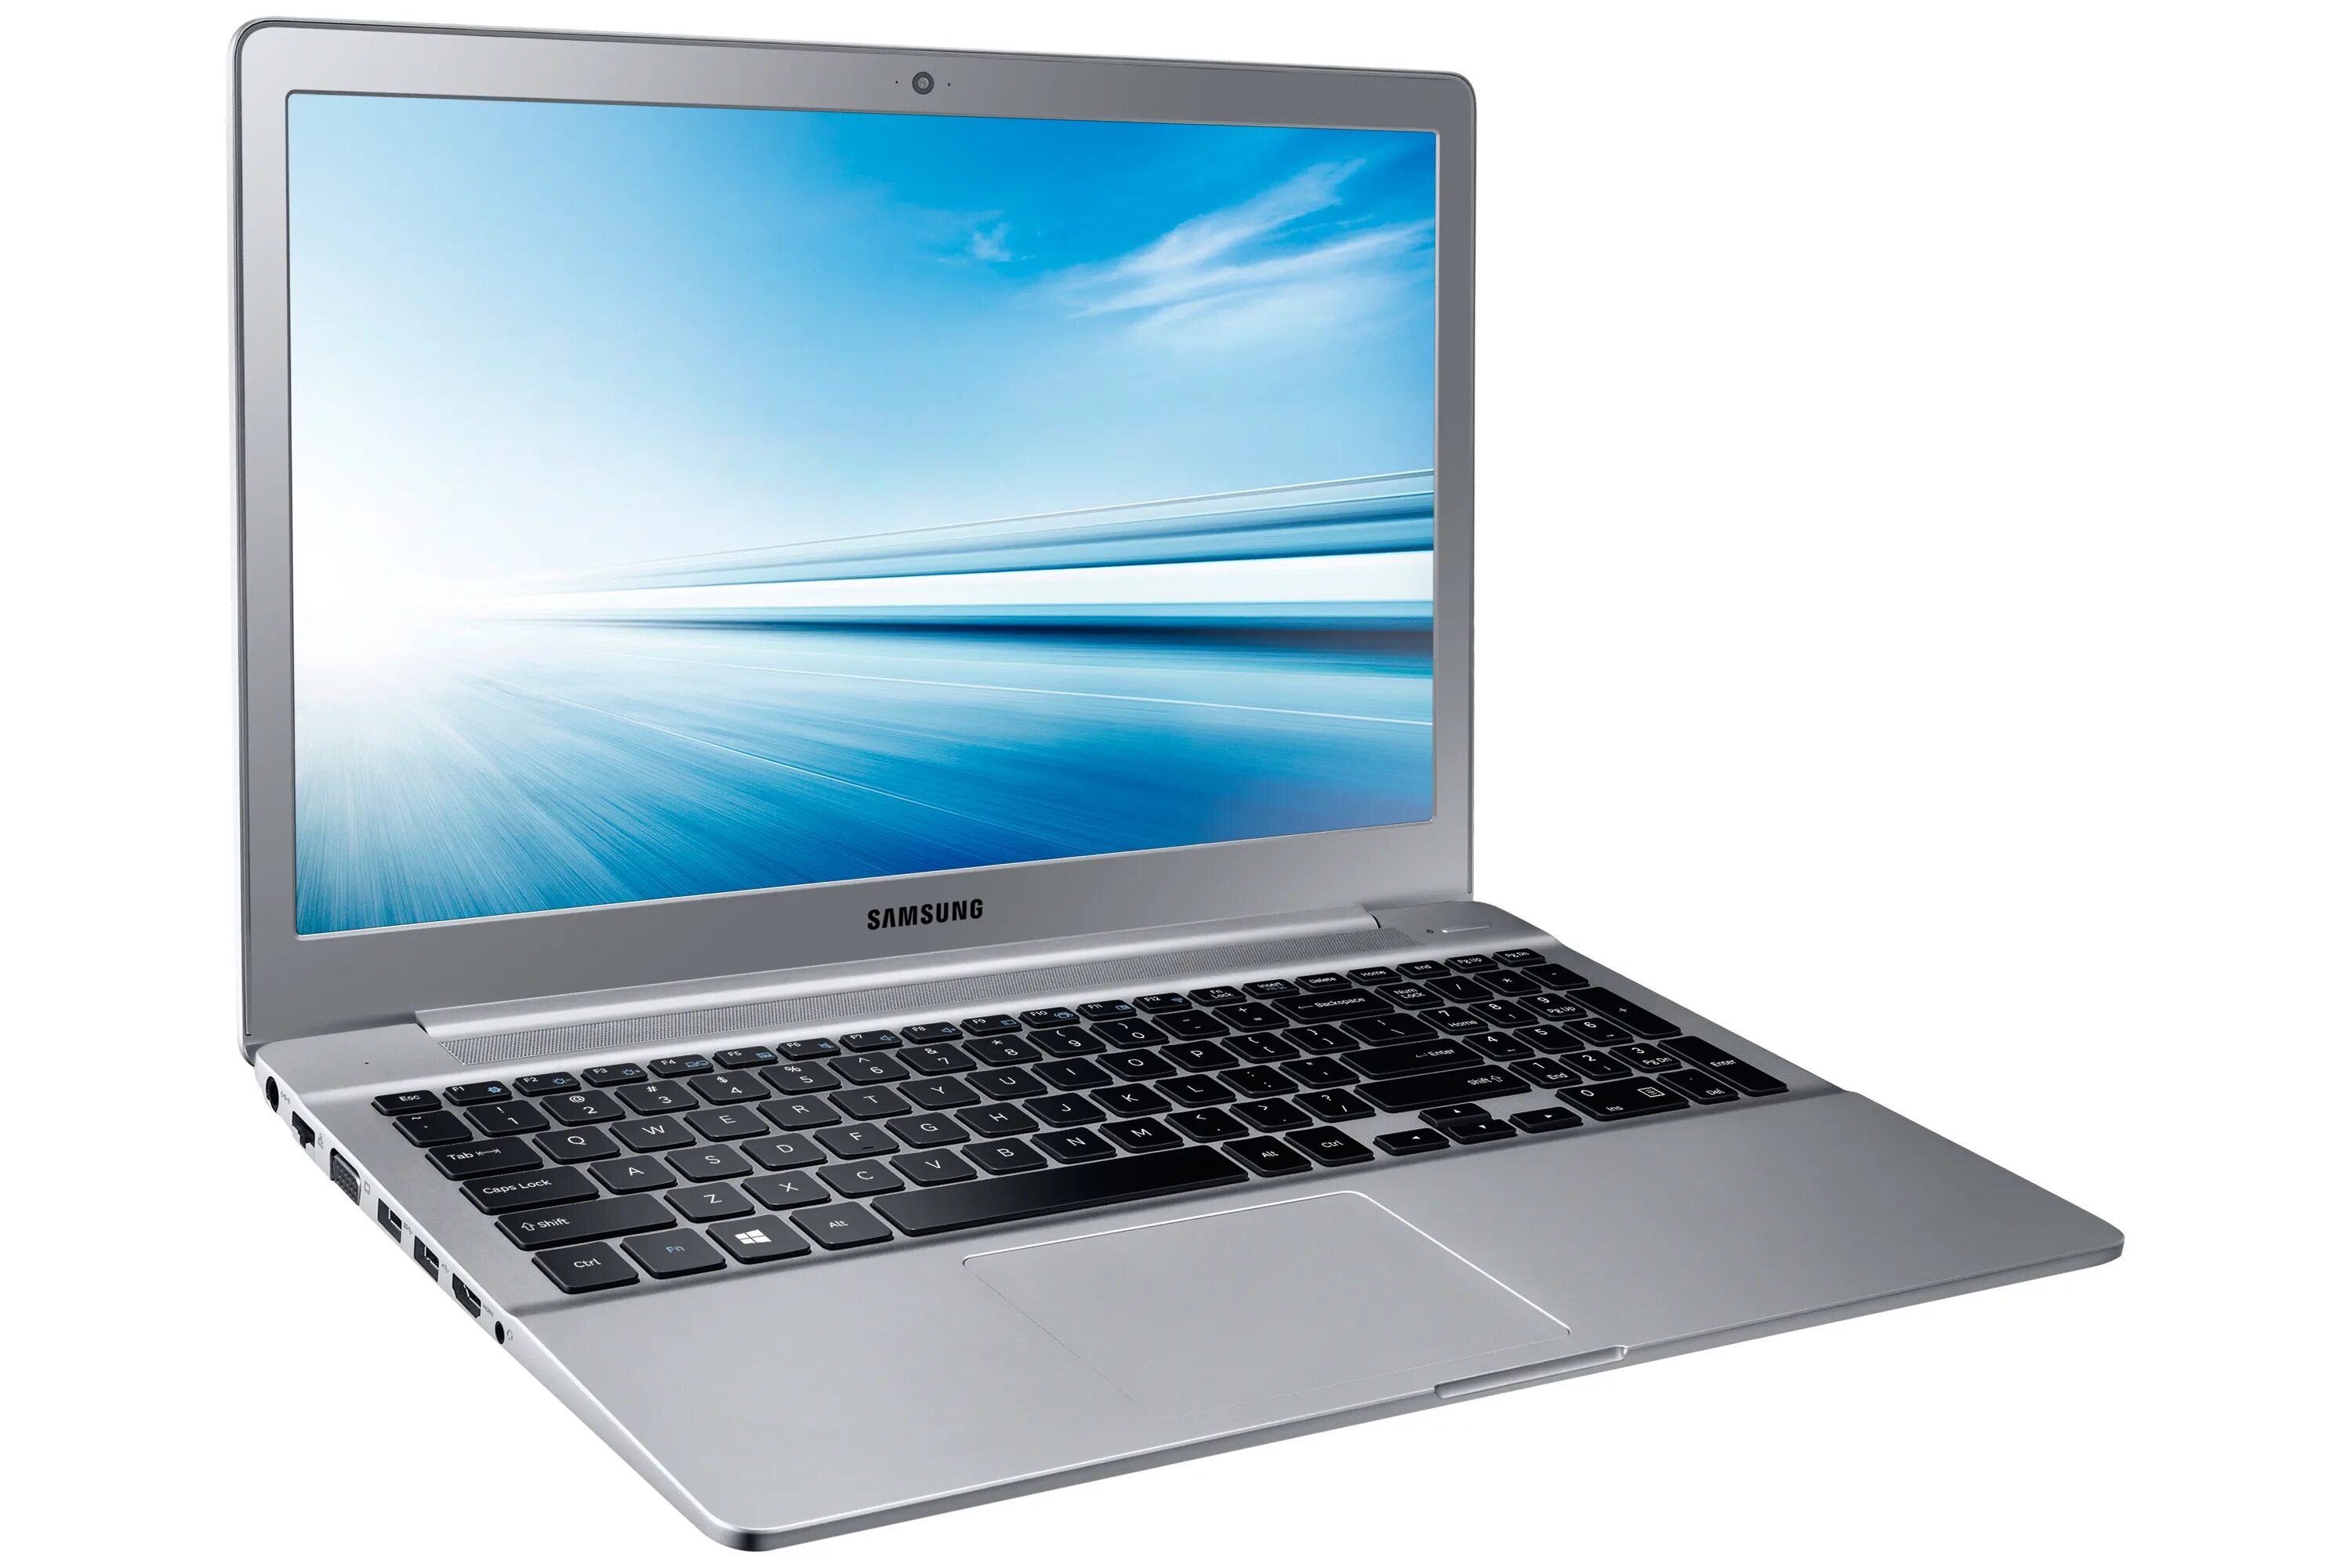 Ноутбук самсунг видит. Ноутбук самсунг серебристый. Ноутбук Samsung серебристый i3. Самсунг nt300e5k. Ноутбук самсунг серый.